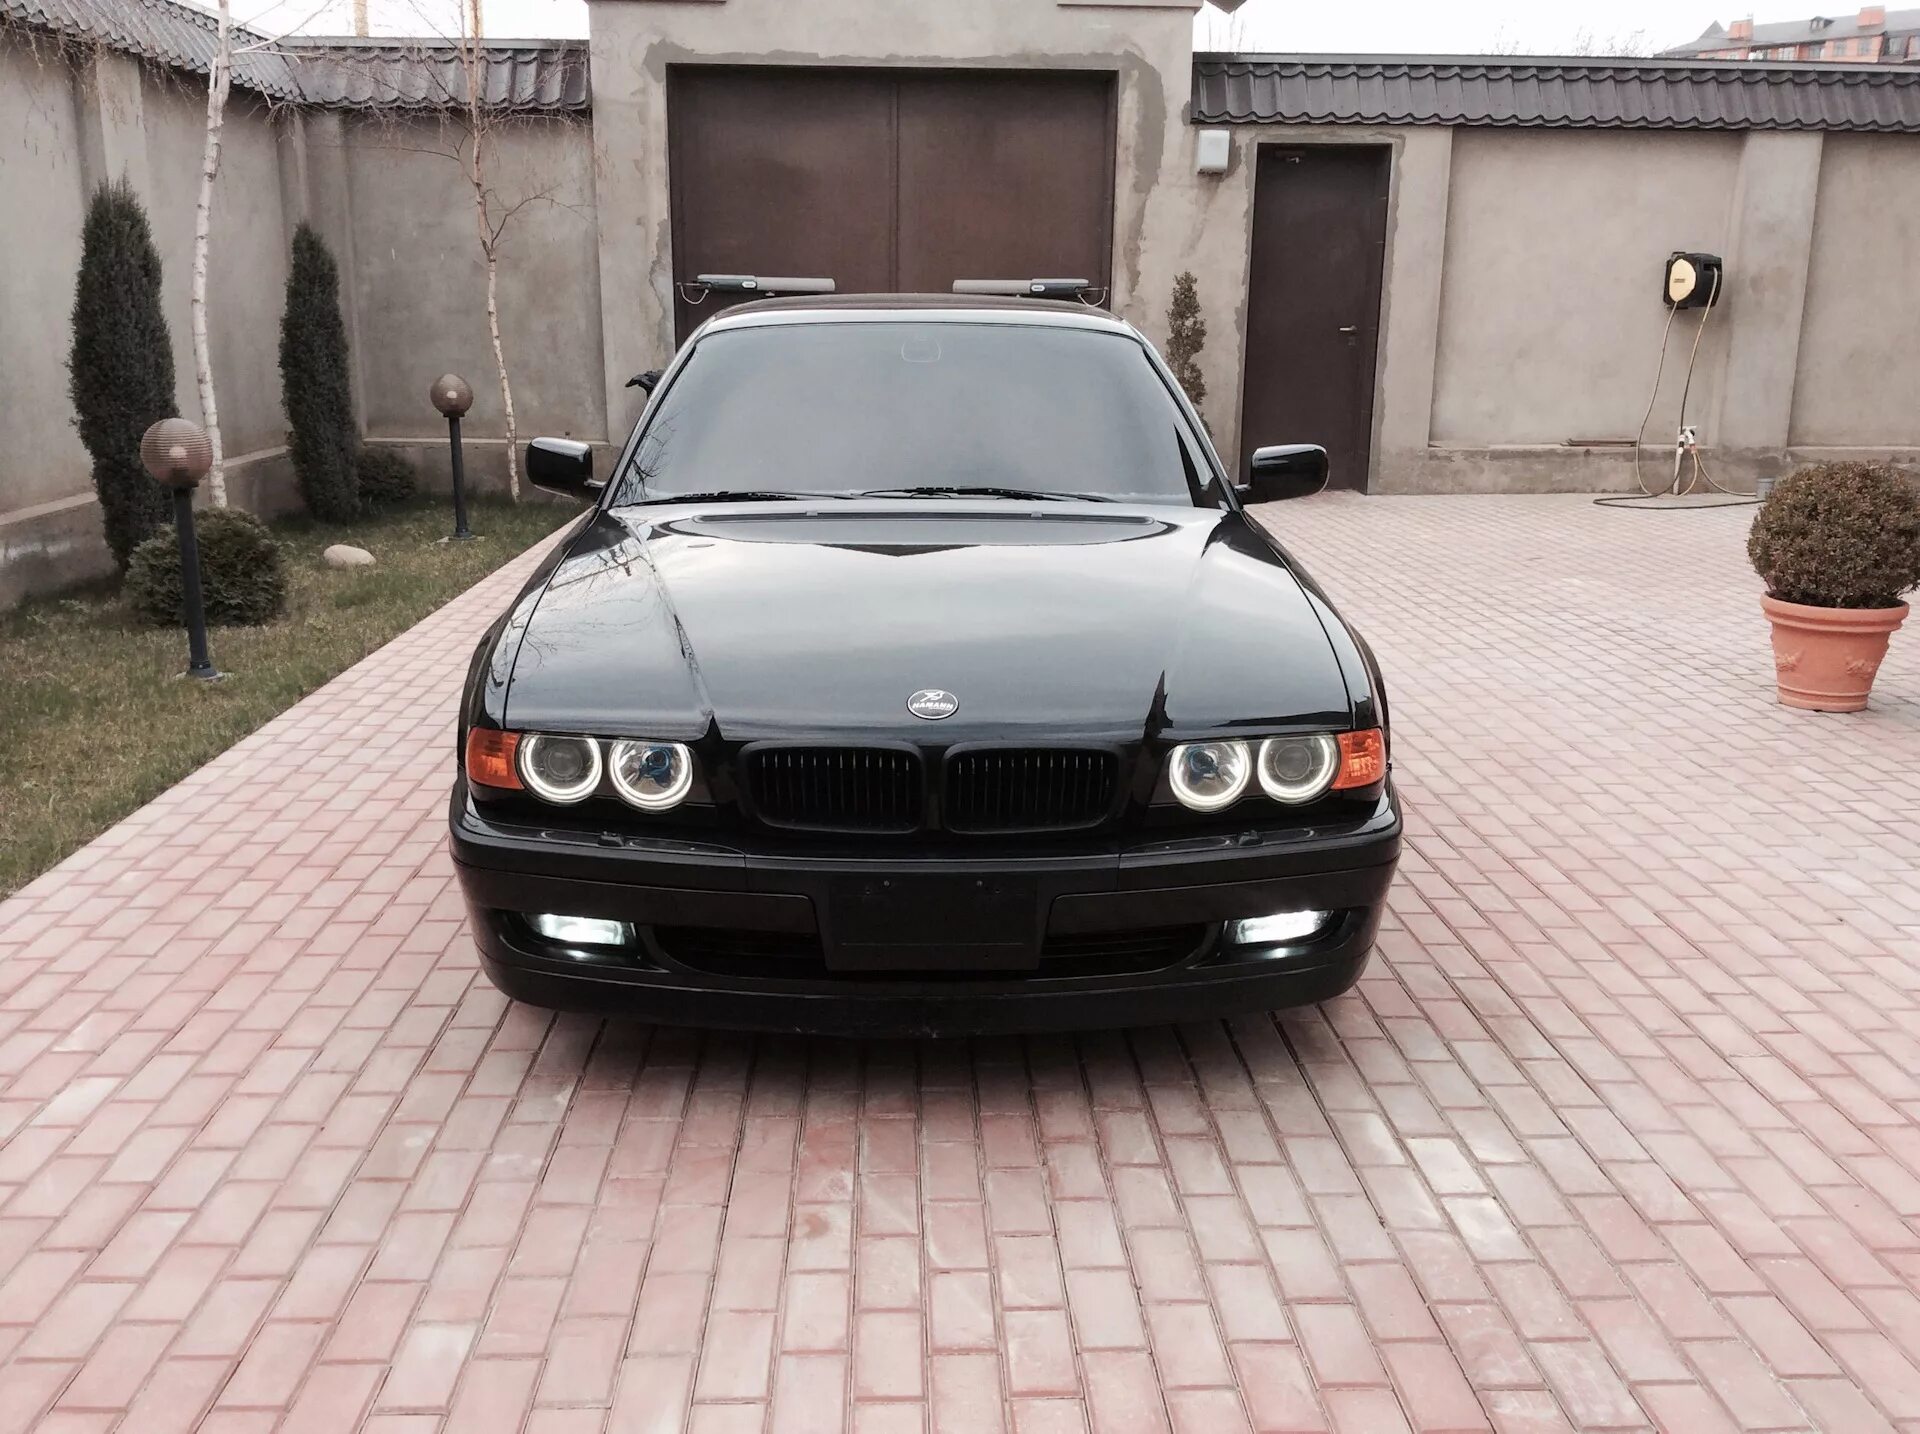 BMW 7 2001. БМВ 7 2001. БМВ 7 е38 2001. BMW 7 Series 2001. Беха беха семерка